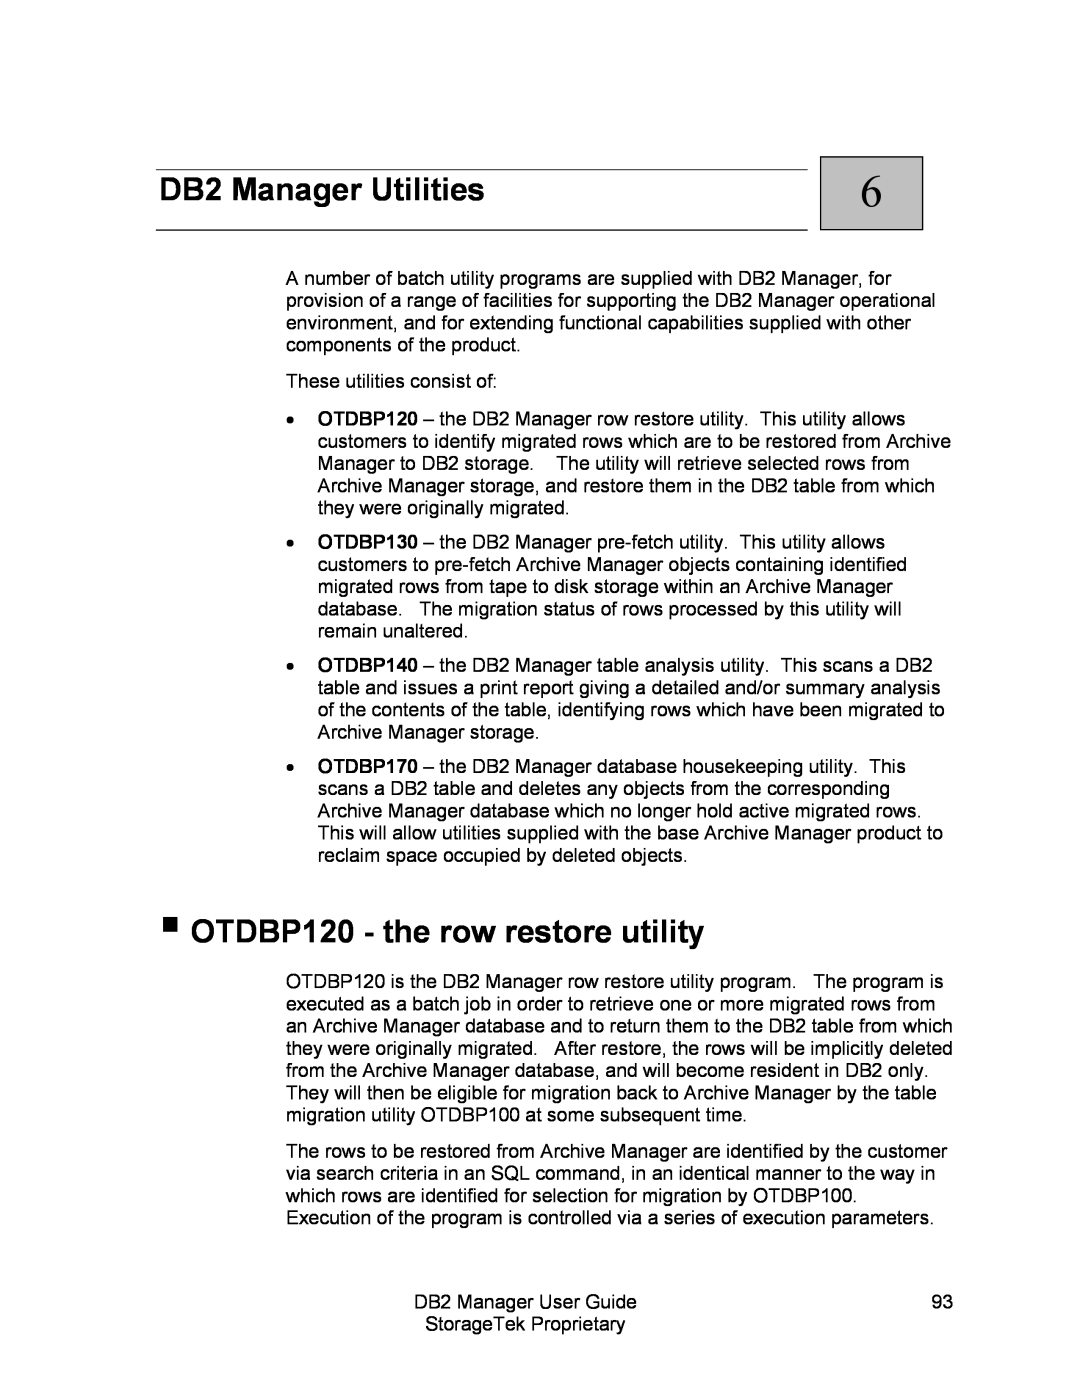 StorageTek 312564001 manual DB2 Manager Utilities, OTDBP120 - the row restore utility 